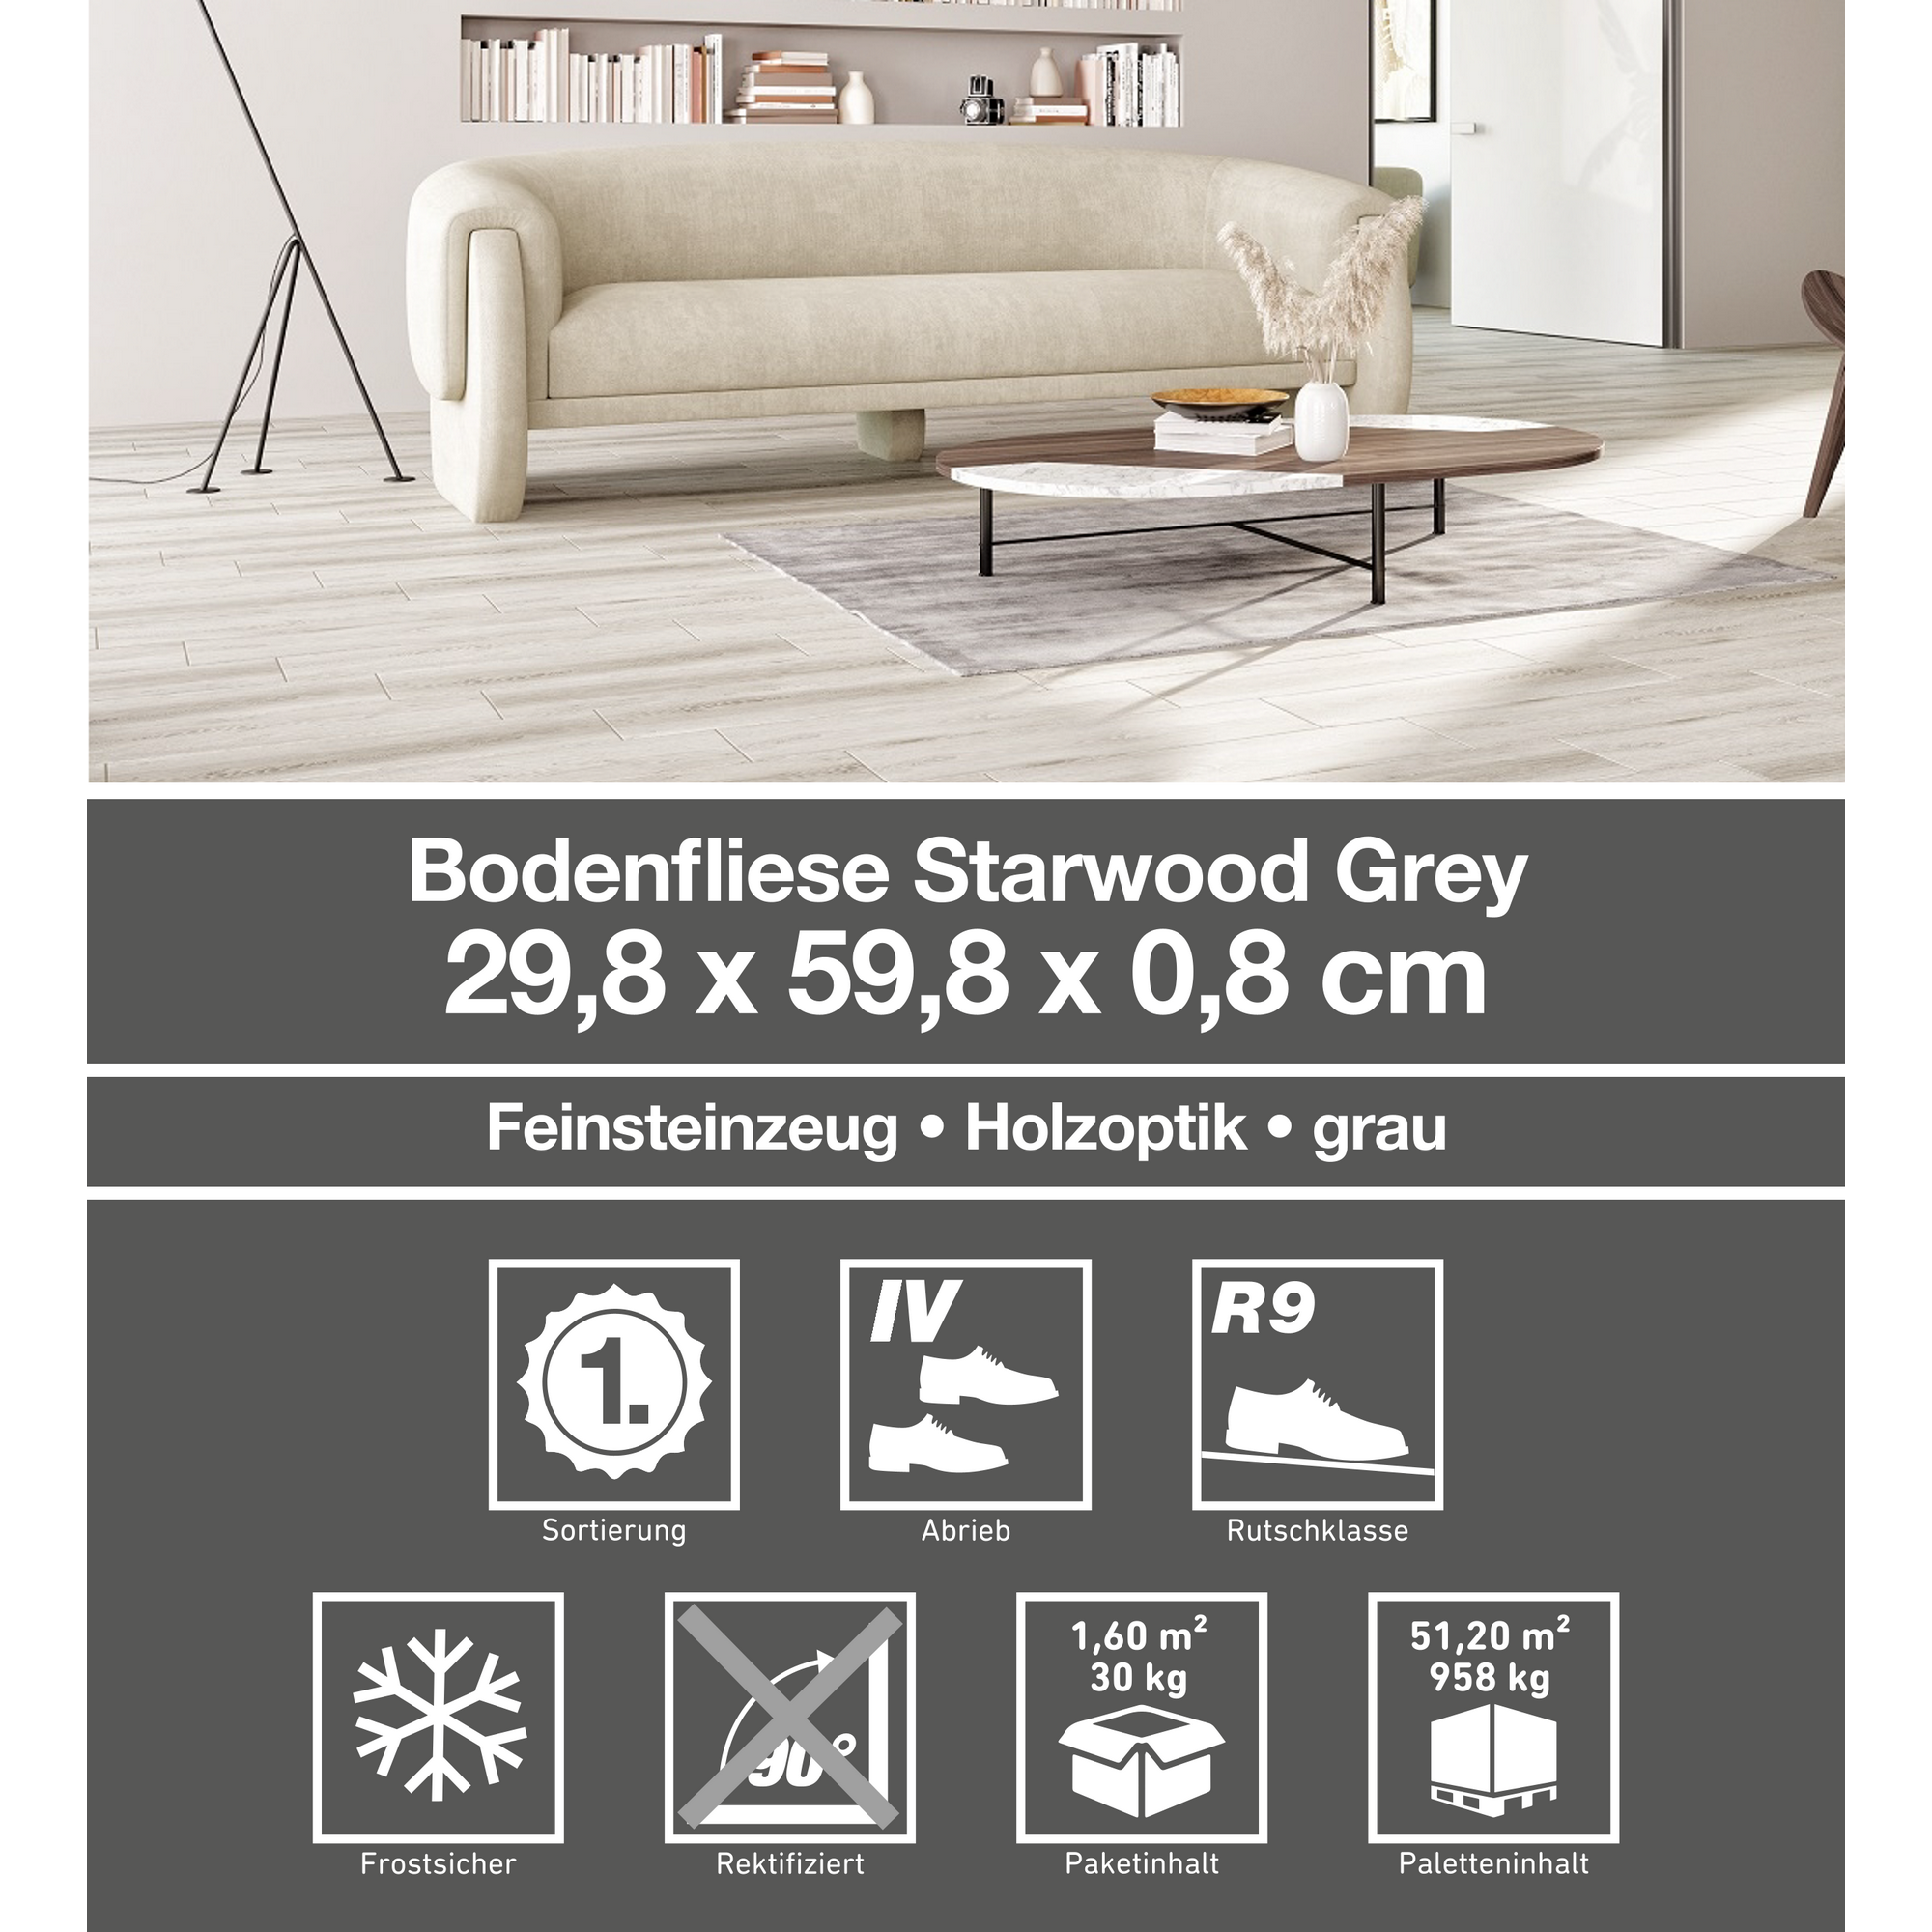 Bodenfliese 'Starwood' Feinsteinzeug grau 29,8 x 59,8 cm + product picture